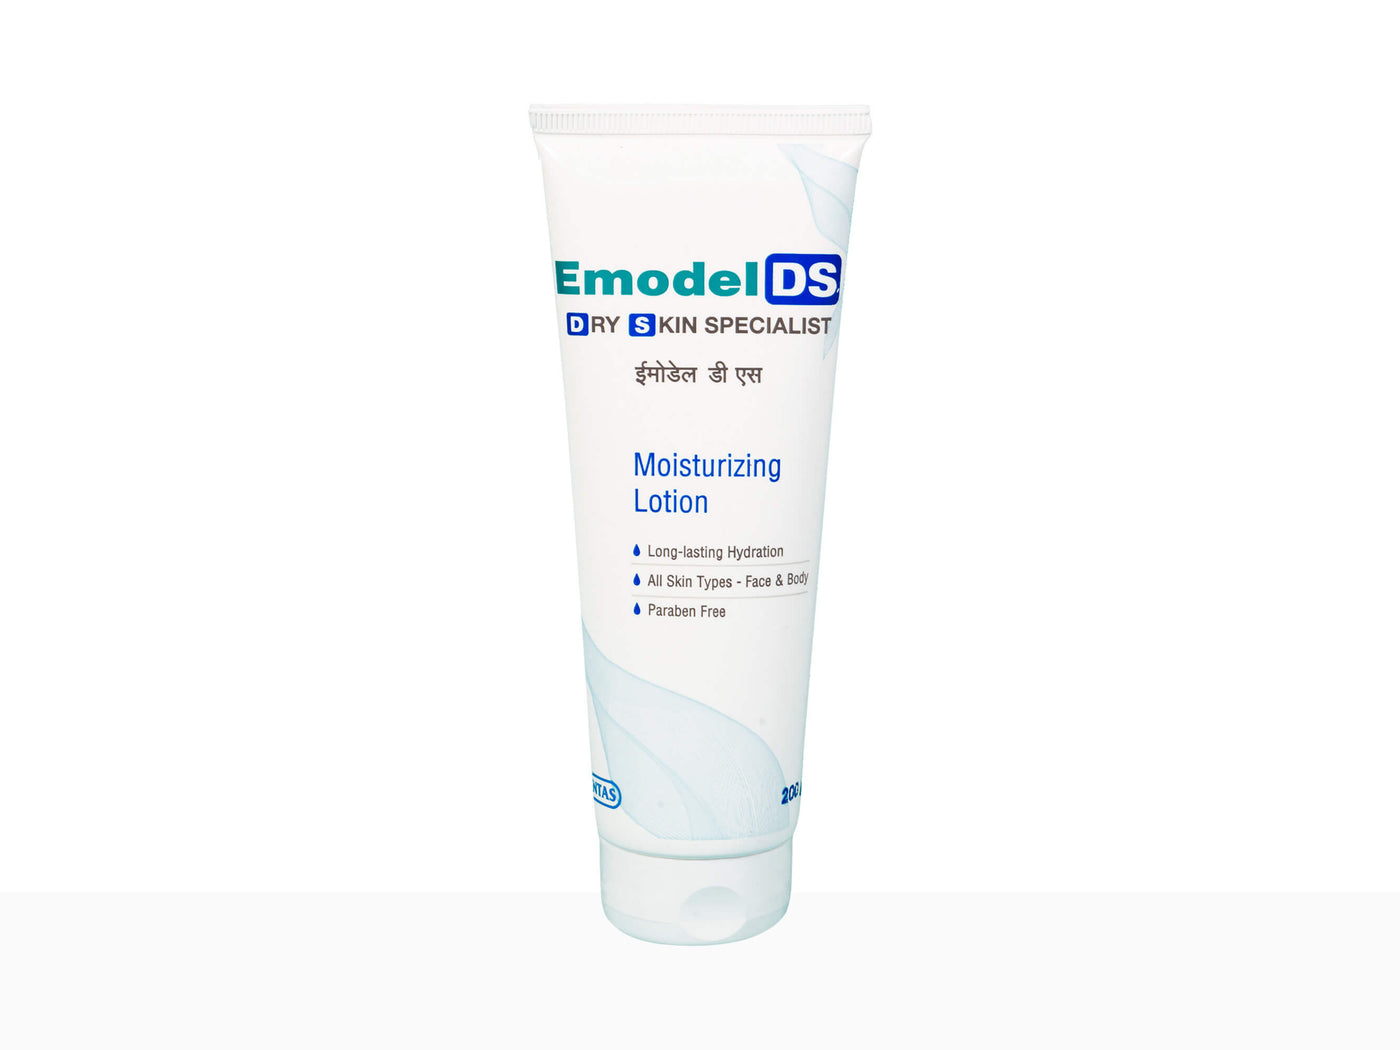 Emodel DS moisturizing lotion - Clinikally